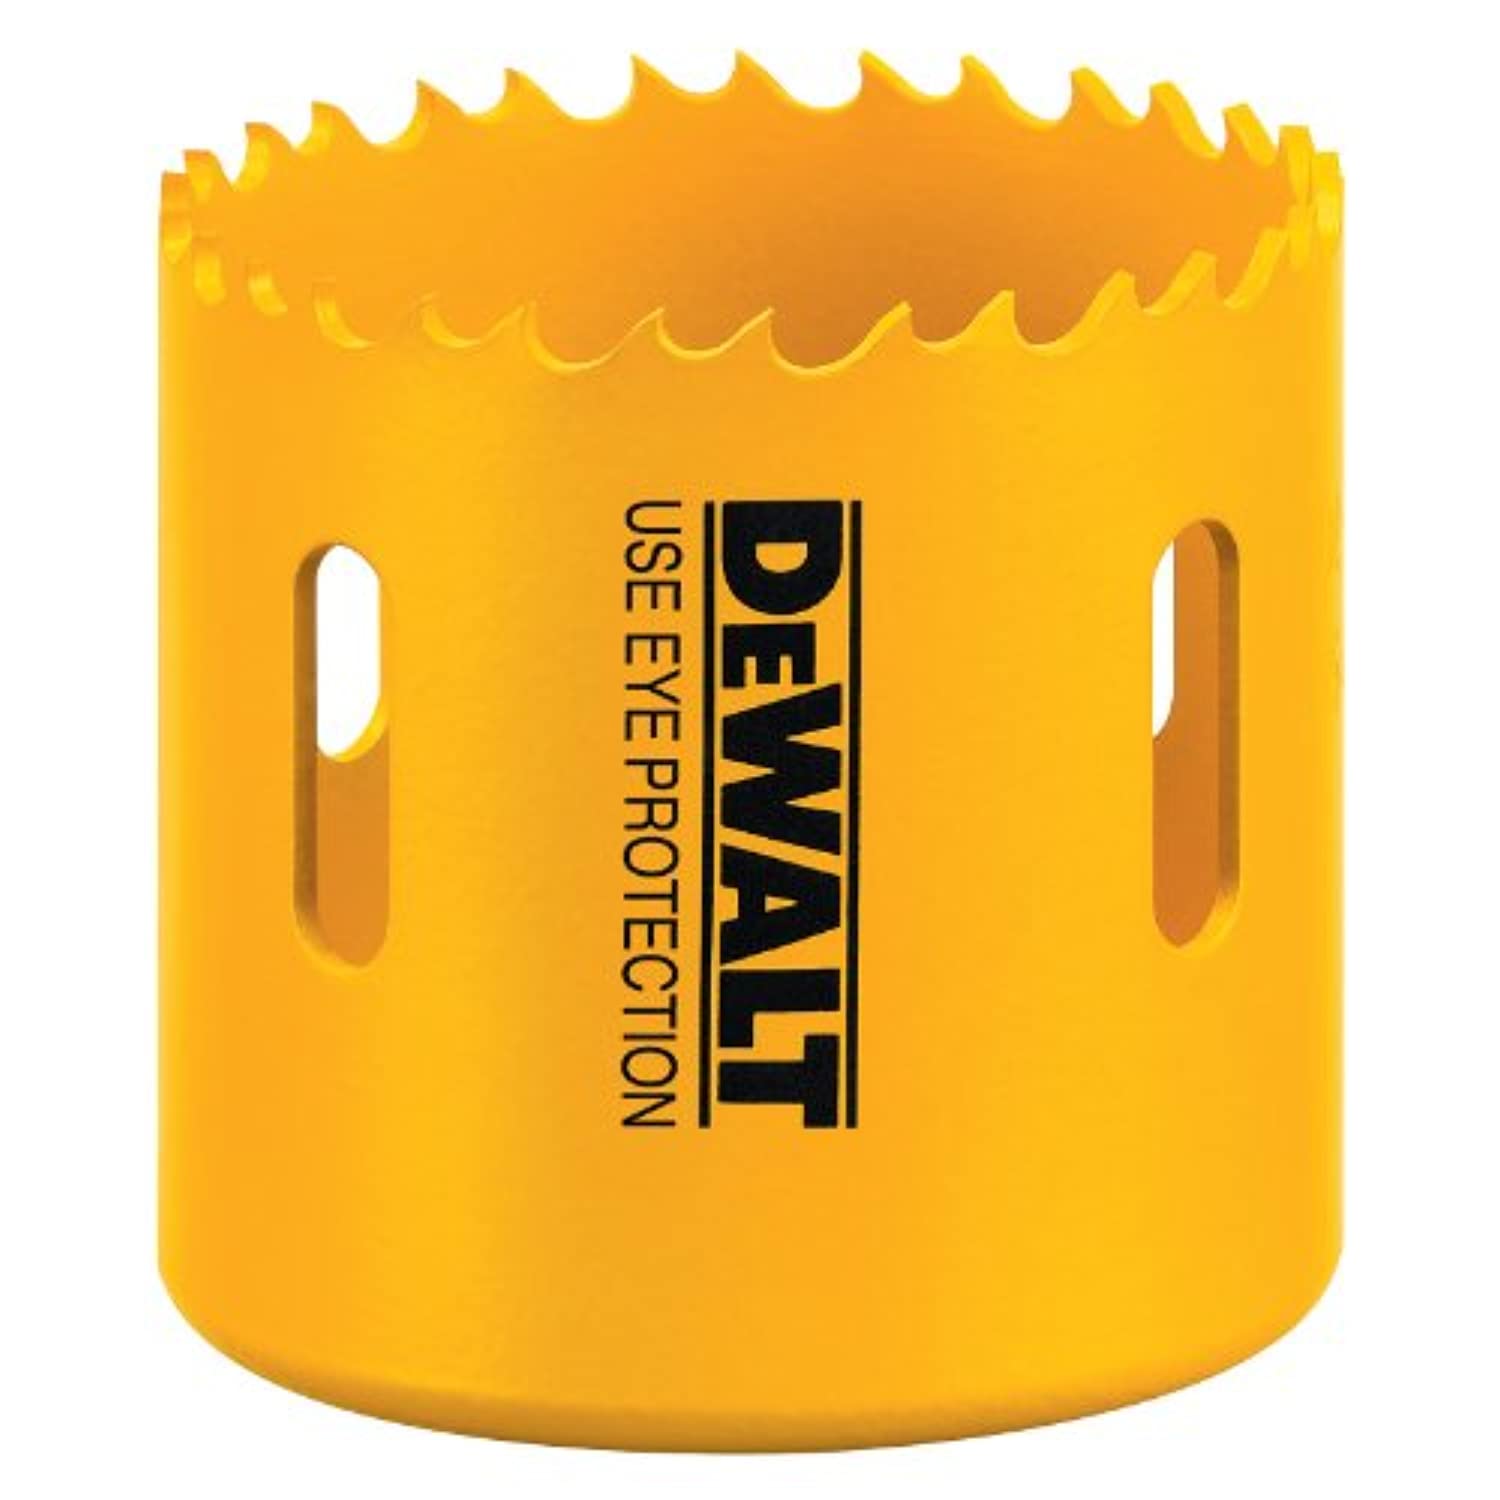 DEWALT D180018 1-1/8-Inch Standard Bi-Metal Hole Saw,Yellow